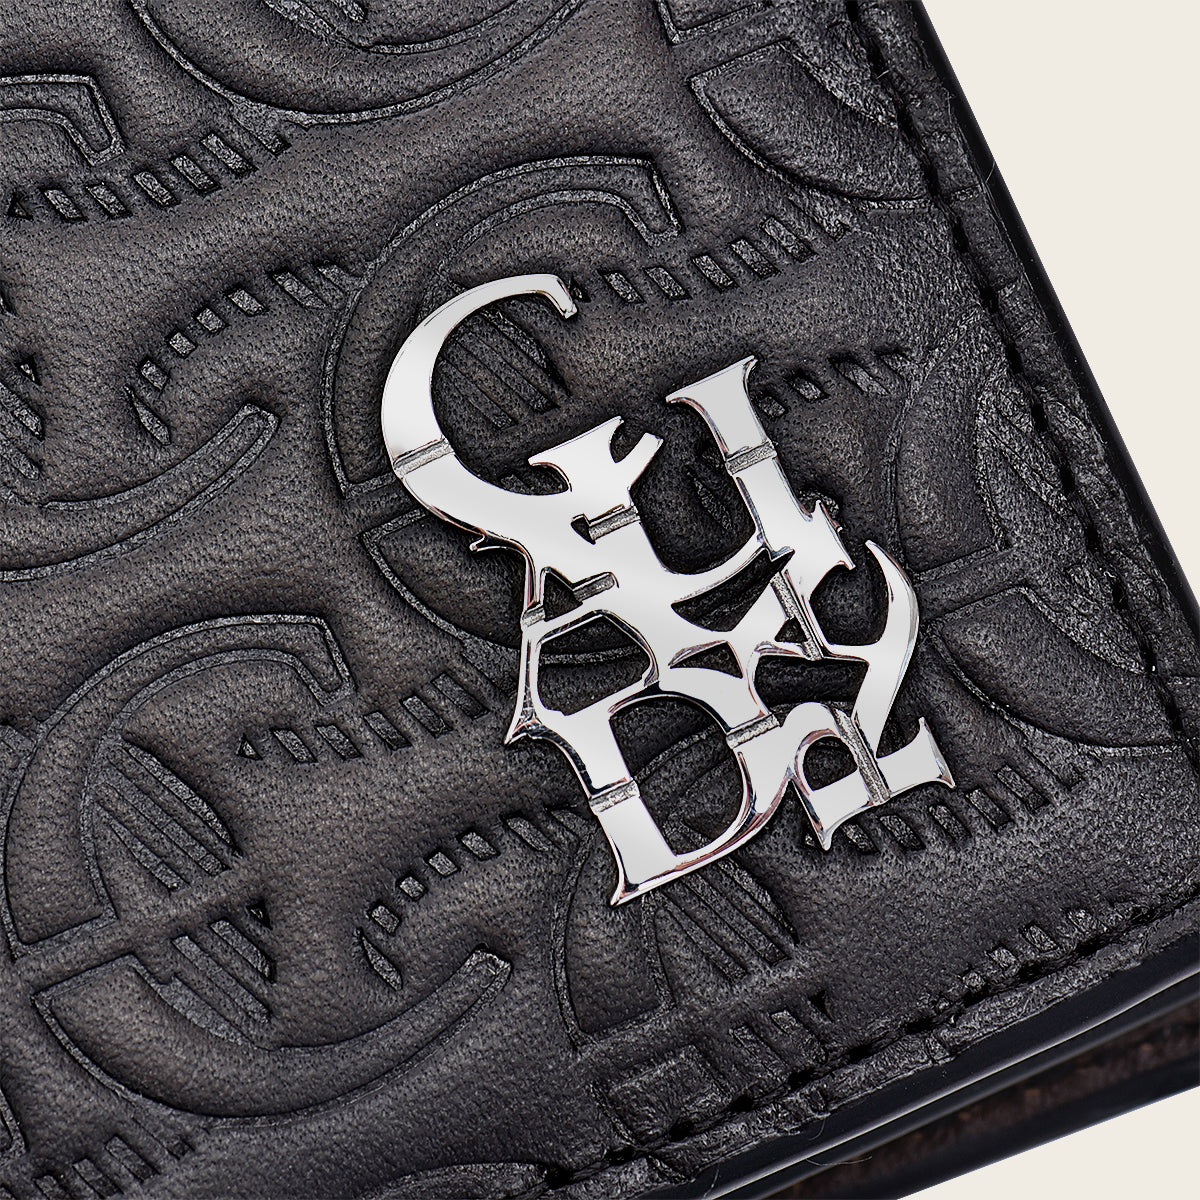 Oxford handmade bovine leather wallet